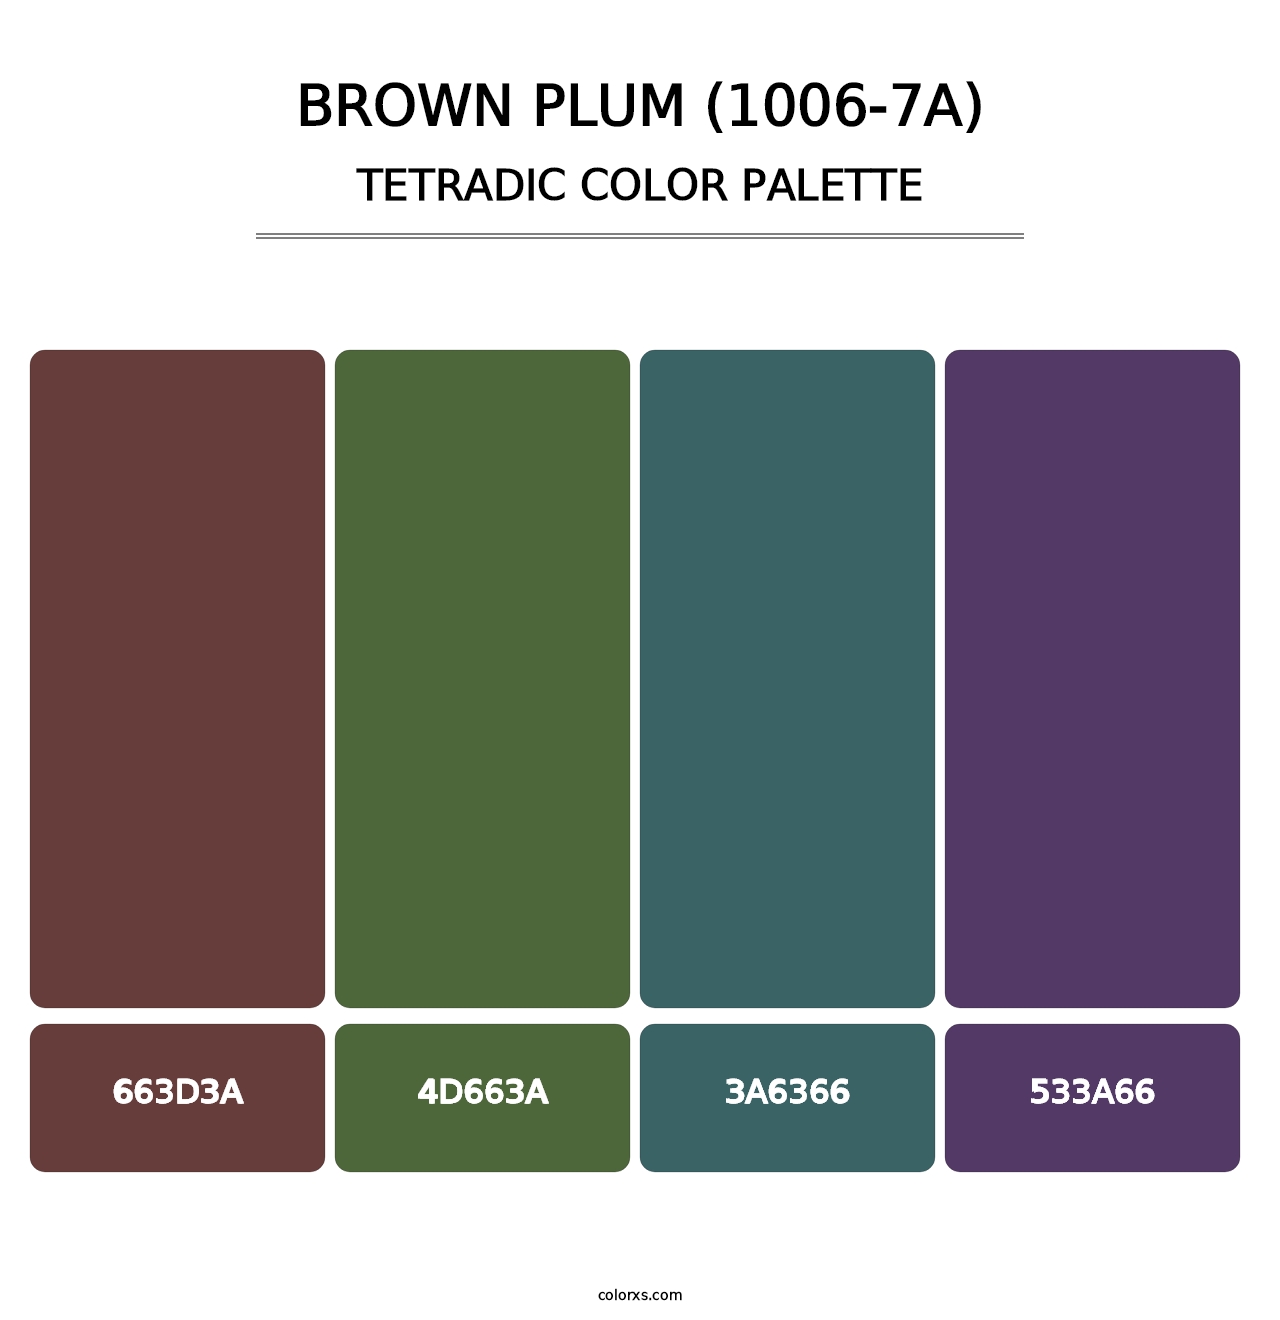 Brown Plum (1006-7A) - Tetradic Color Palette